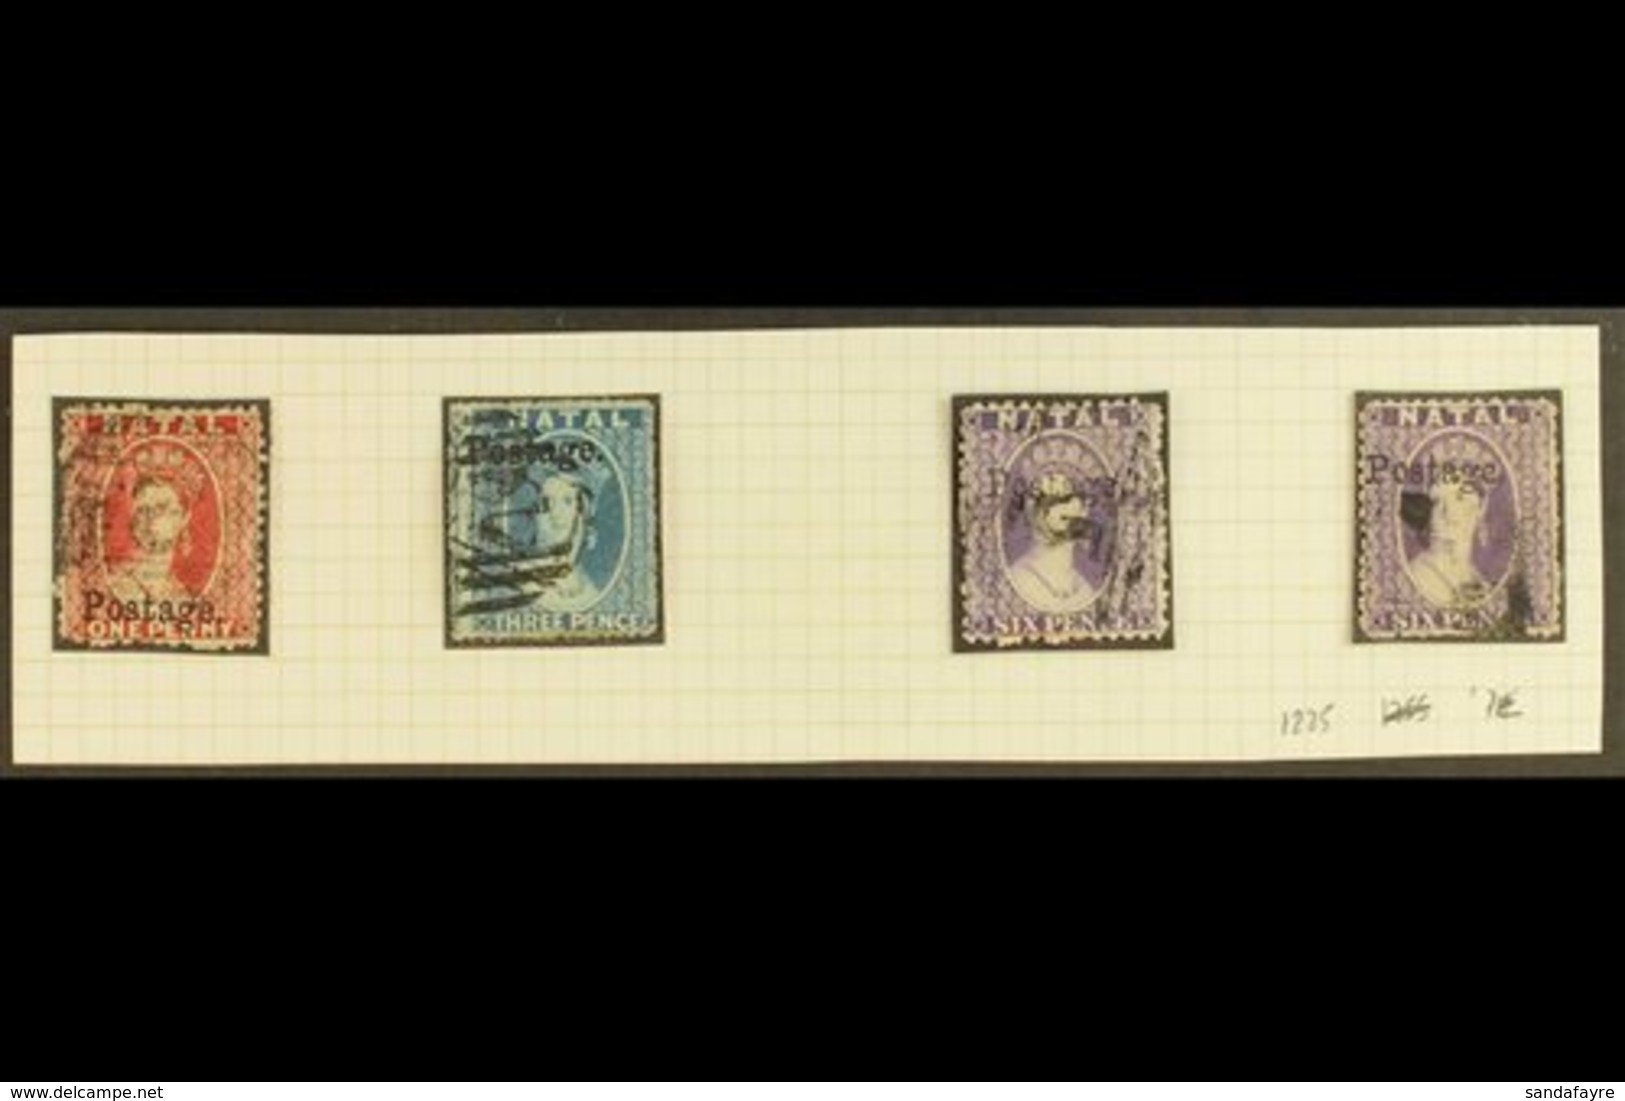 NATAL 1869 "Postage" Ovpts, 13 3/4mm Long, SG Type 7c, 1d Bright Red, 3d Blue Rough Perf, 6d Violet (2), SG 39, 40b, 42, - Zonder Classificatie